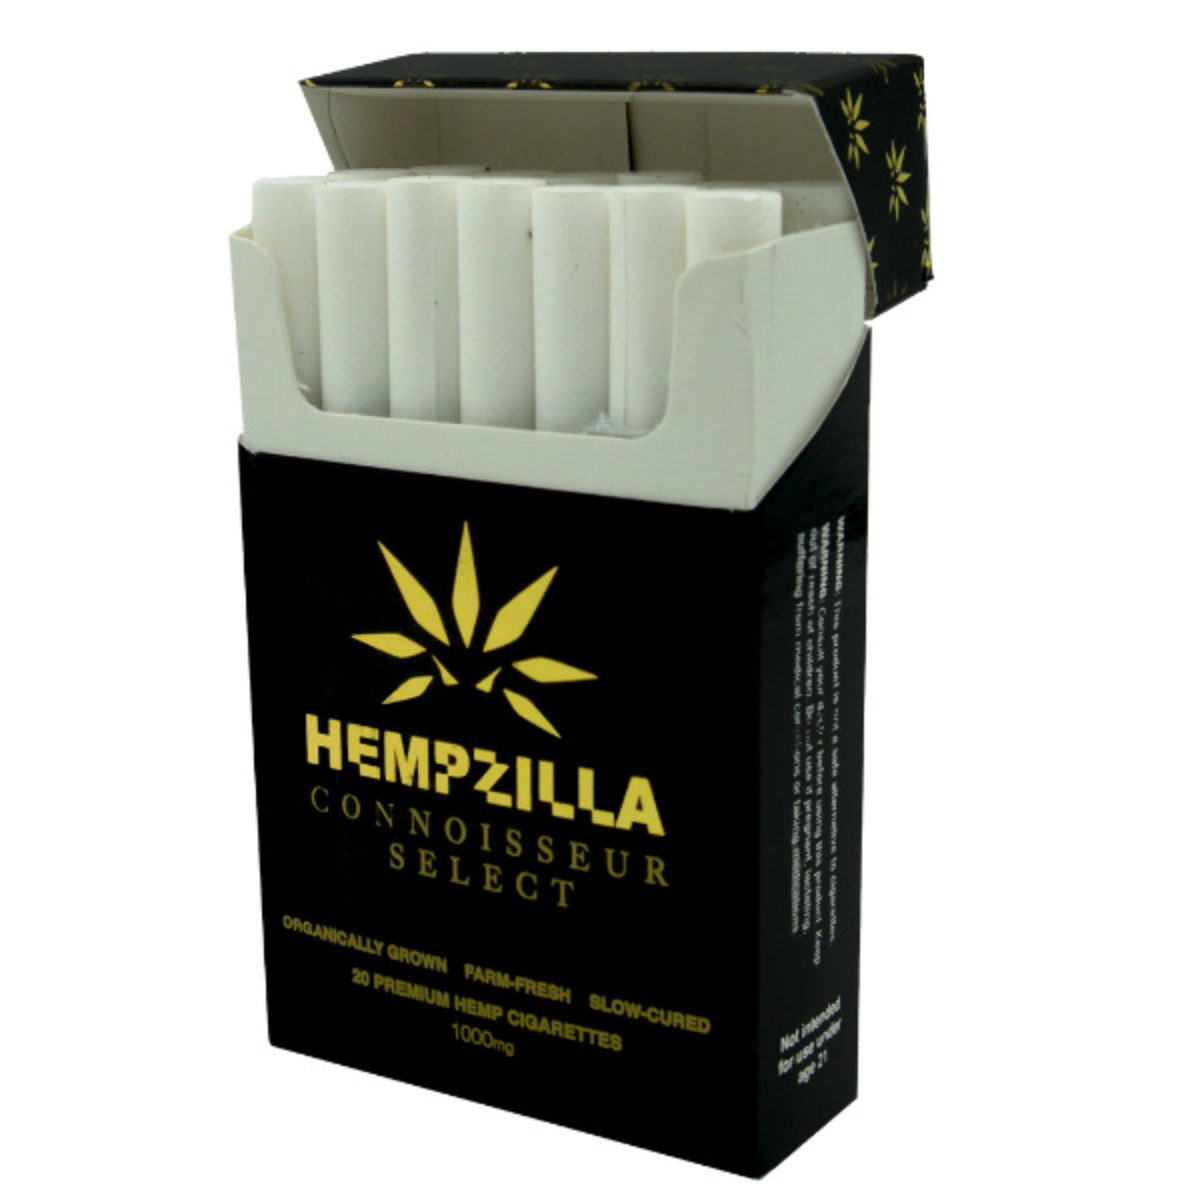 Hempzilla CBD Hemp Cigarettes (20 per pack), 1000mg CBD